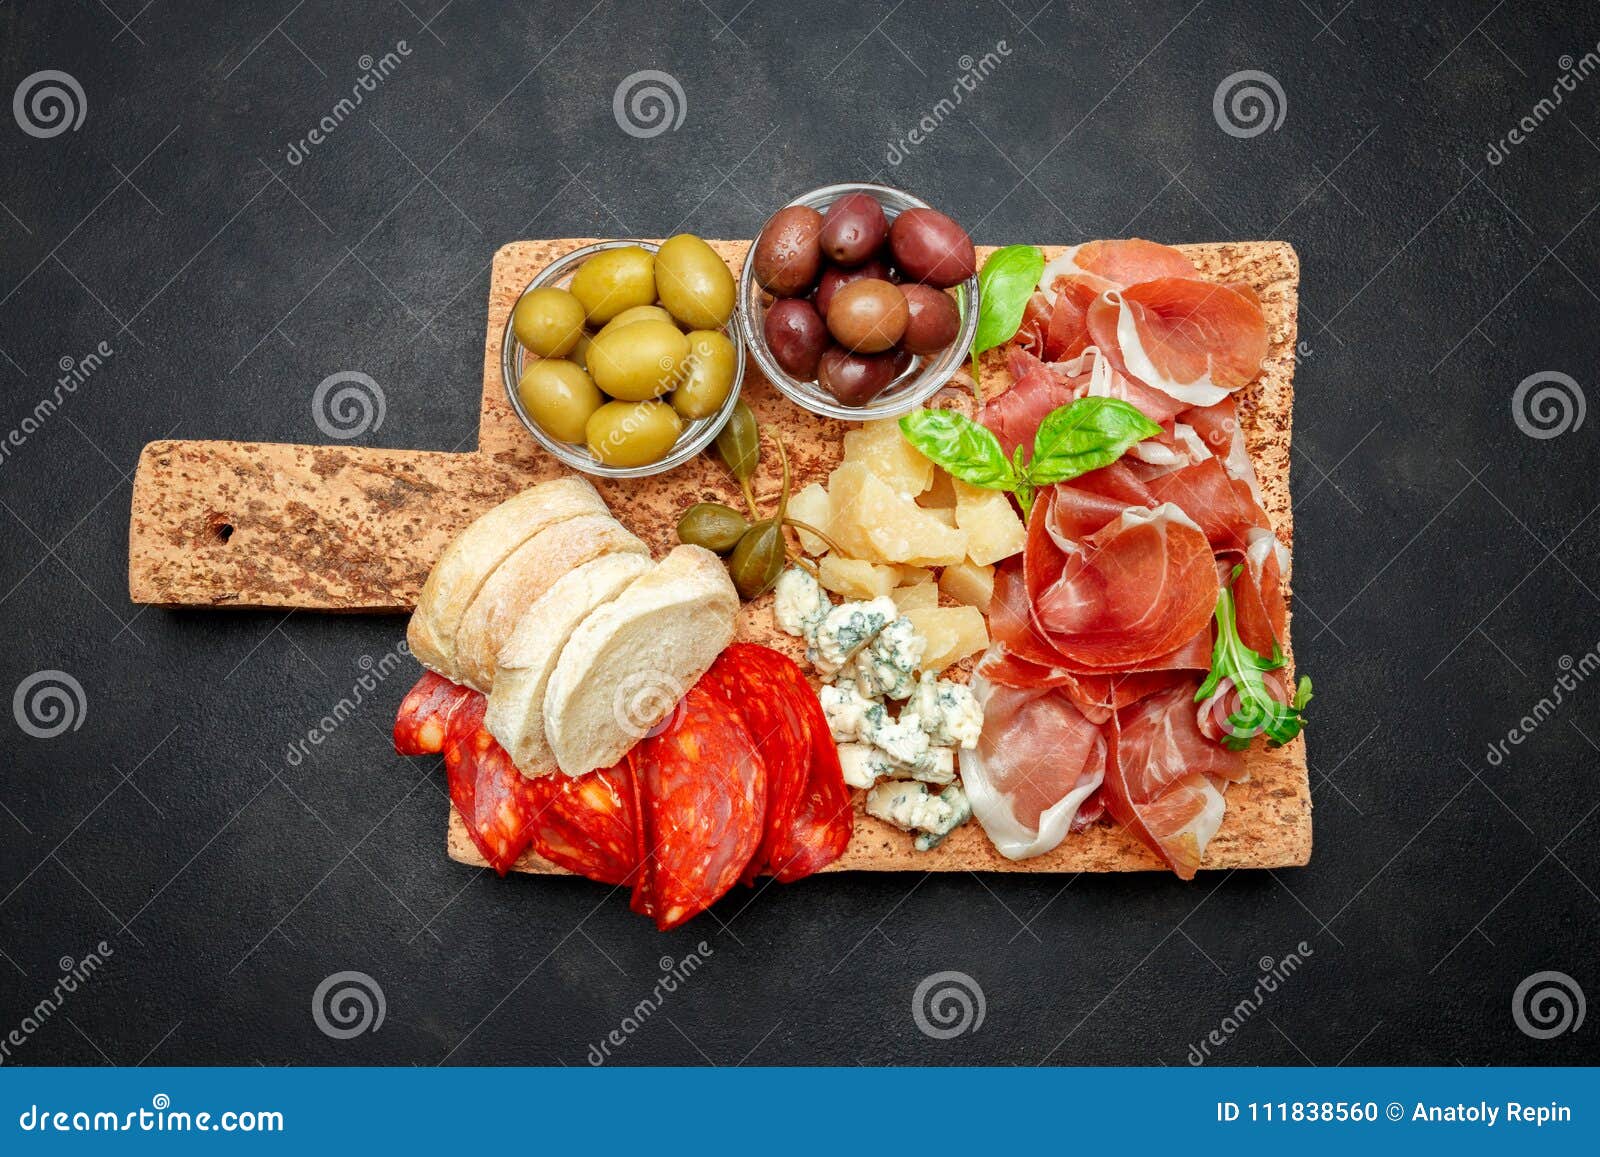 italian prosciutto crudo or spanish jamon, cheese, olives and bread